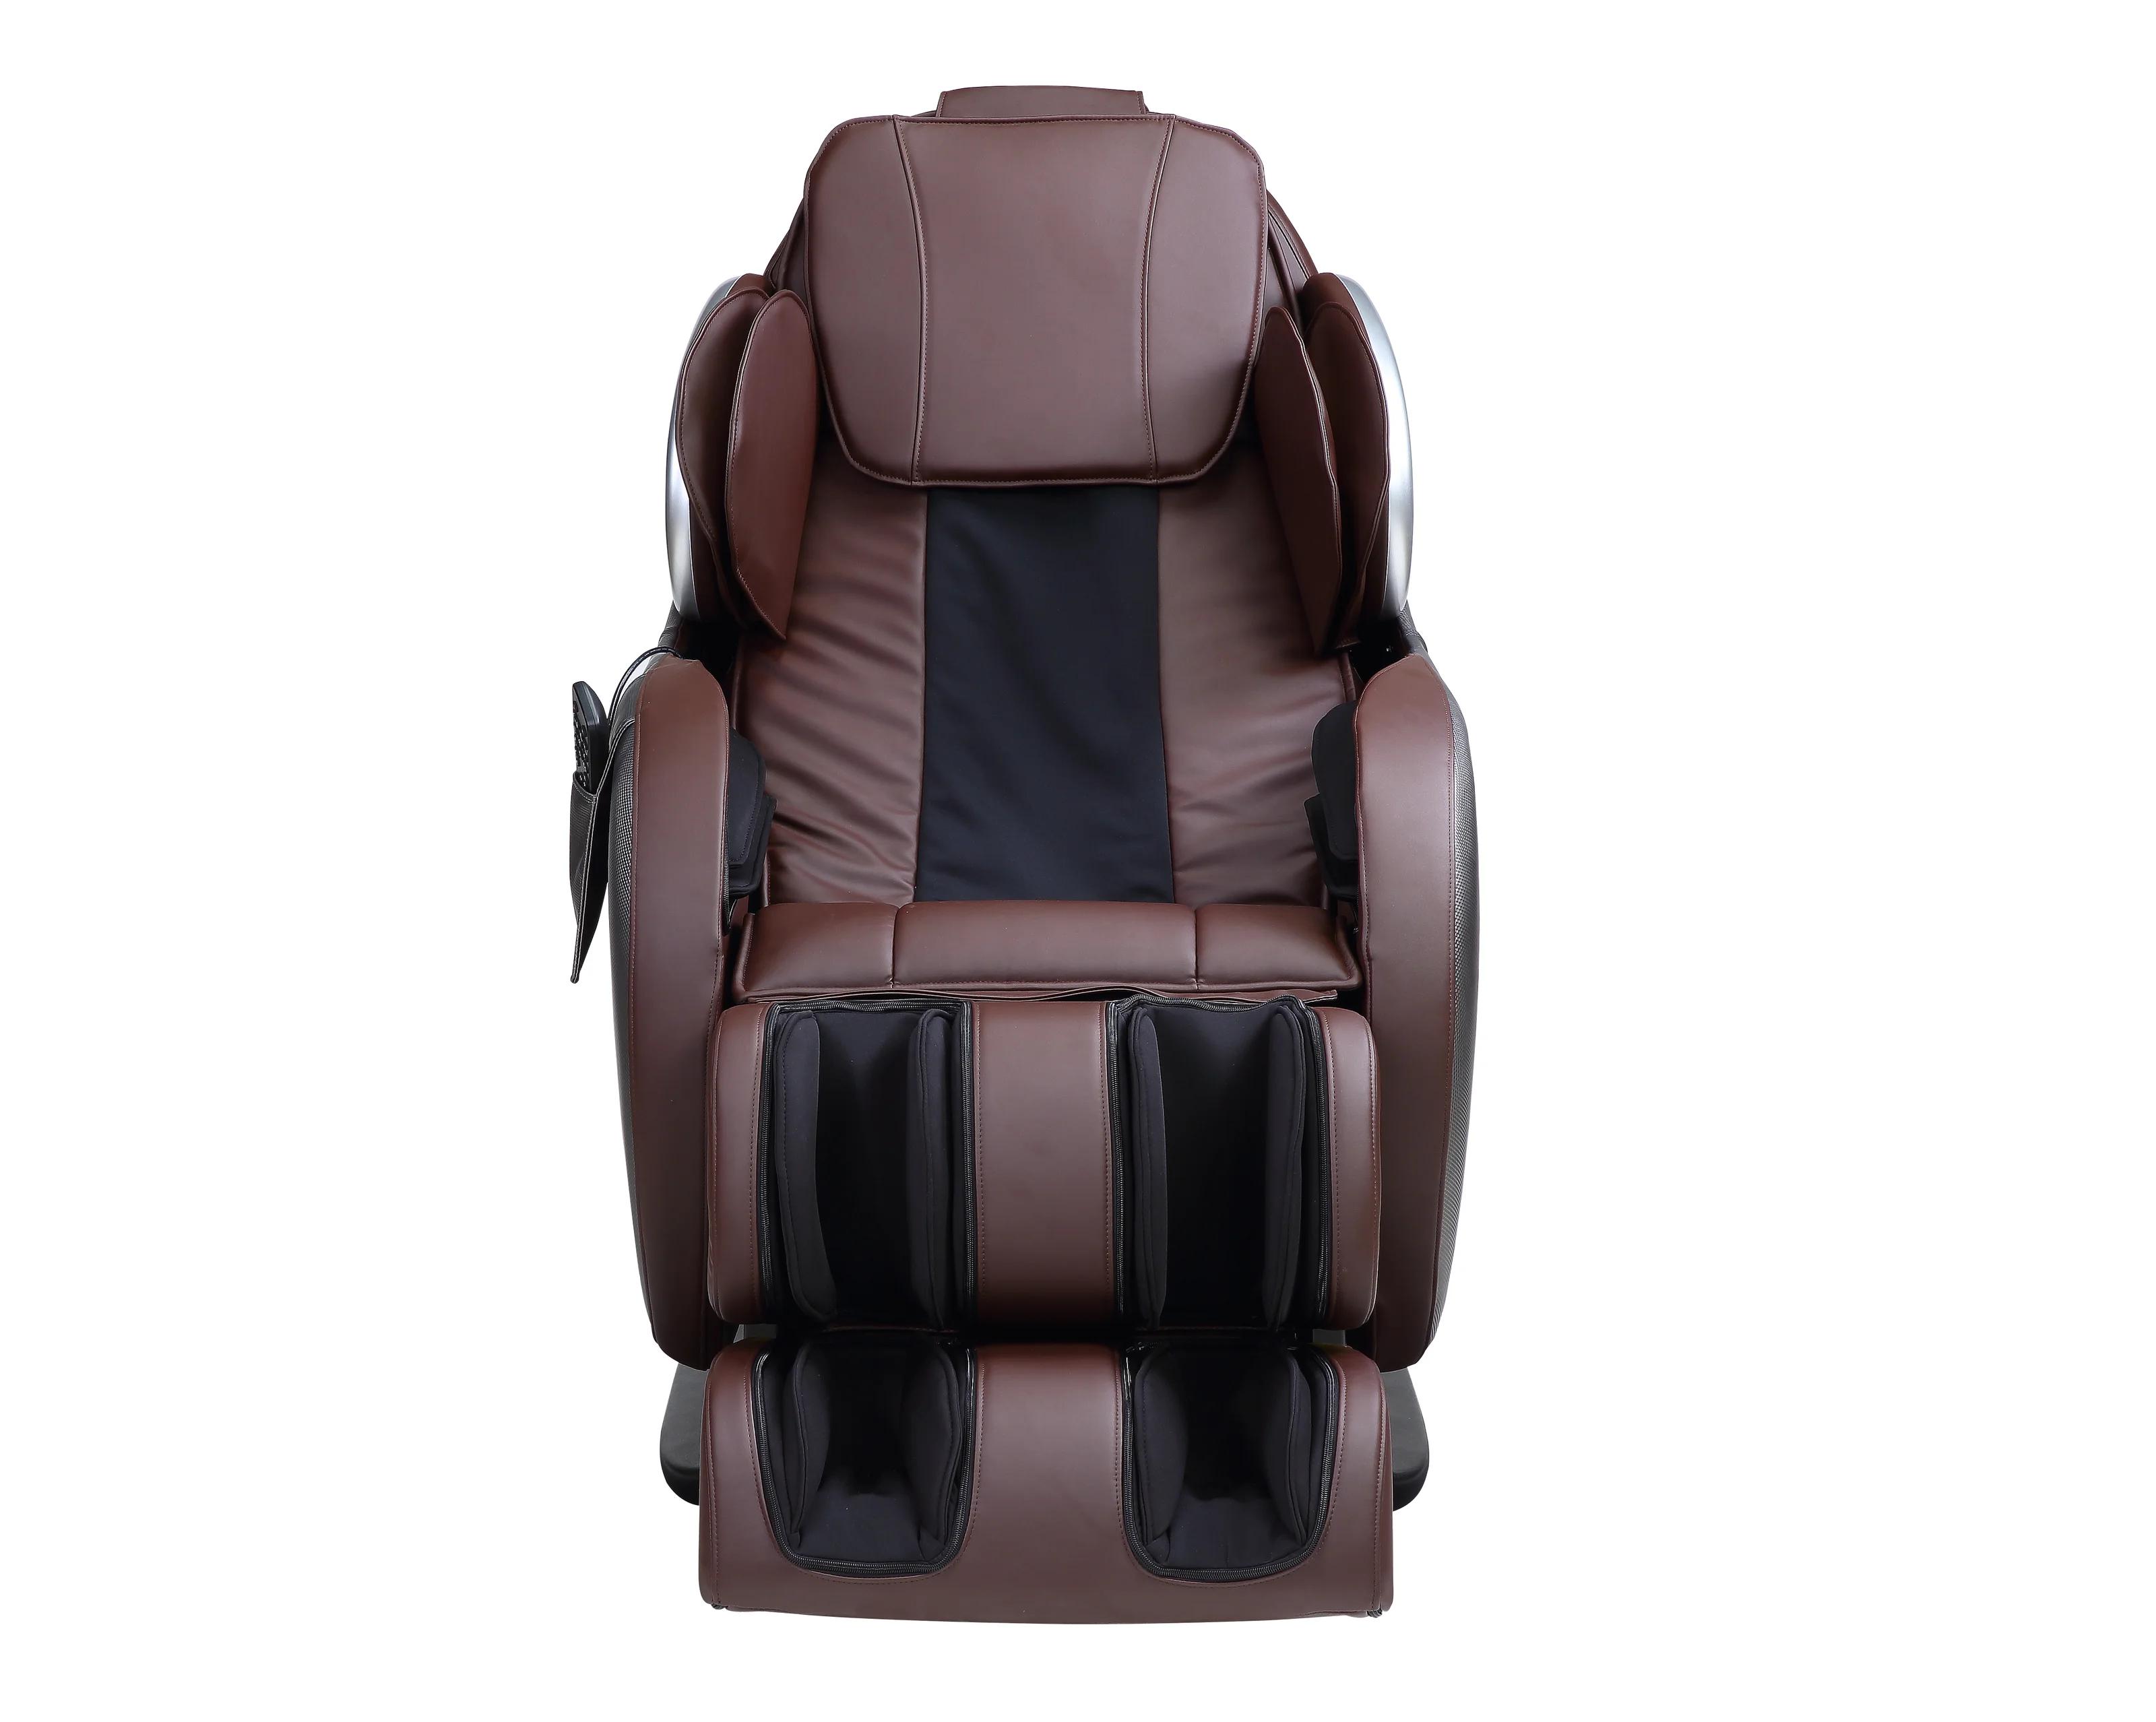 

    
LV00569 Modern Chocolate PU Massage Chair by Acme Pacari LV00569
